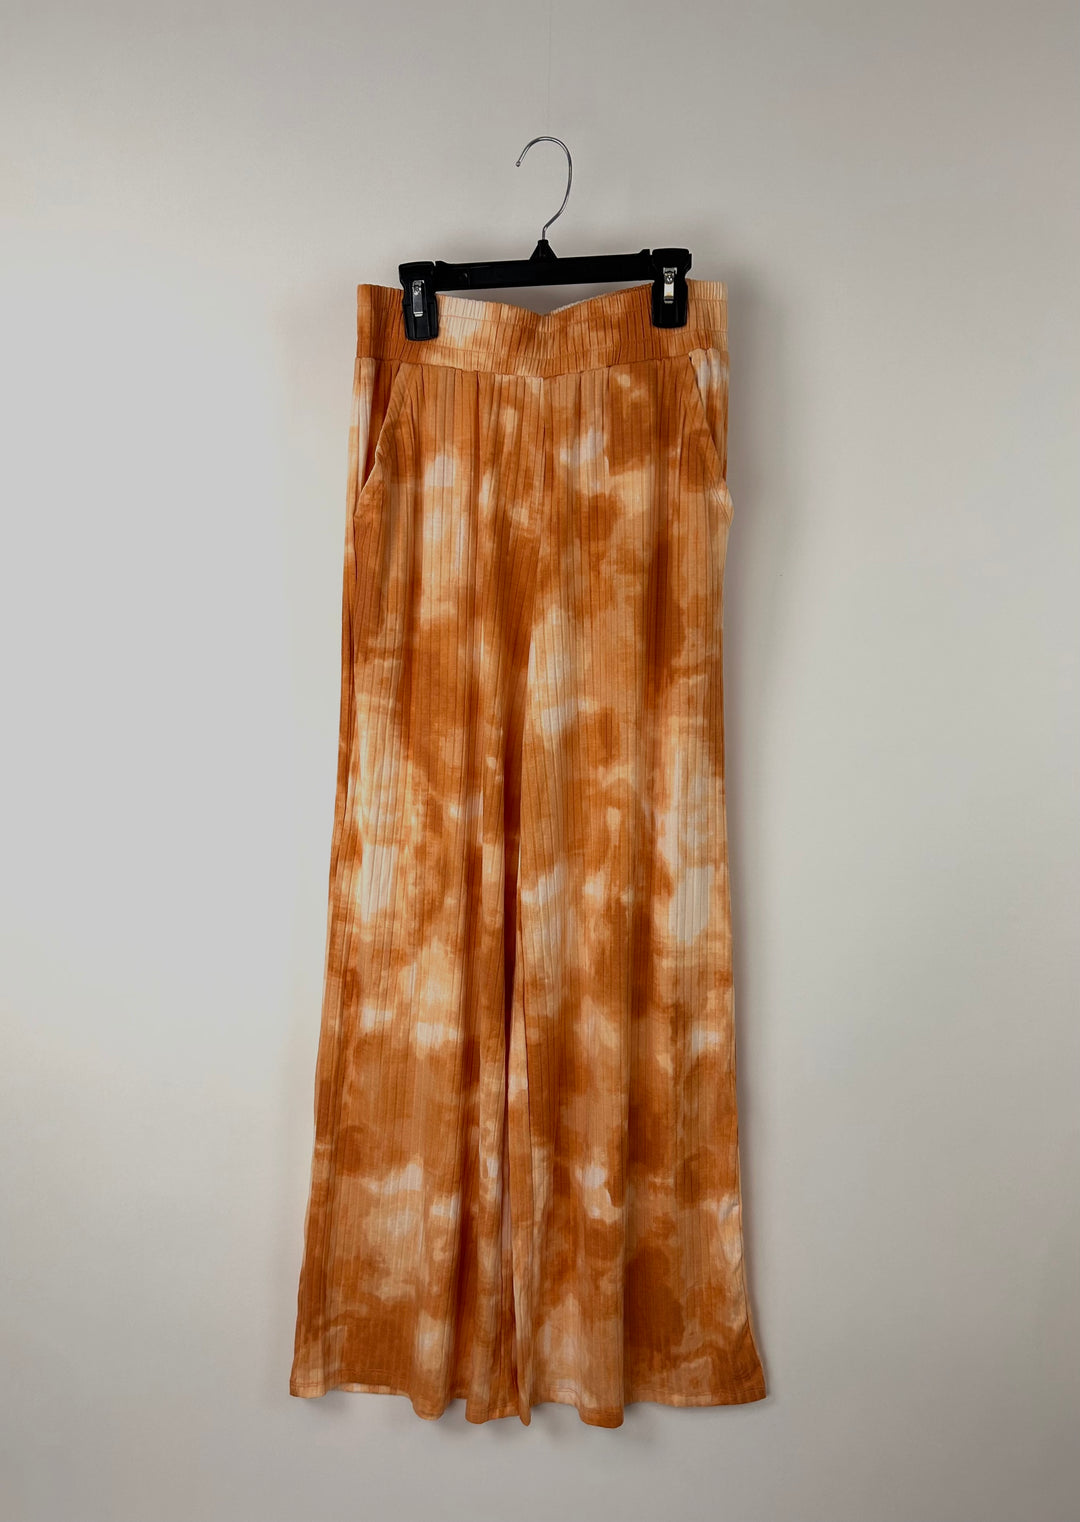 Orange And White Tie Dye Flowy Pants - Size 6/8